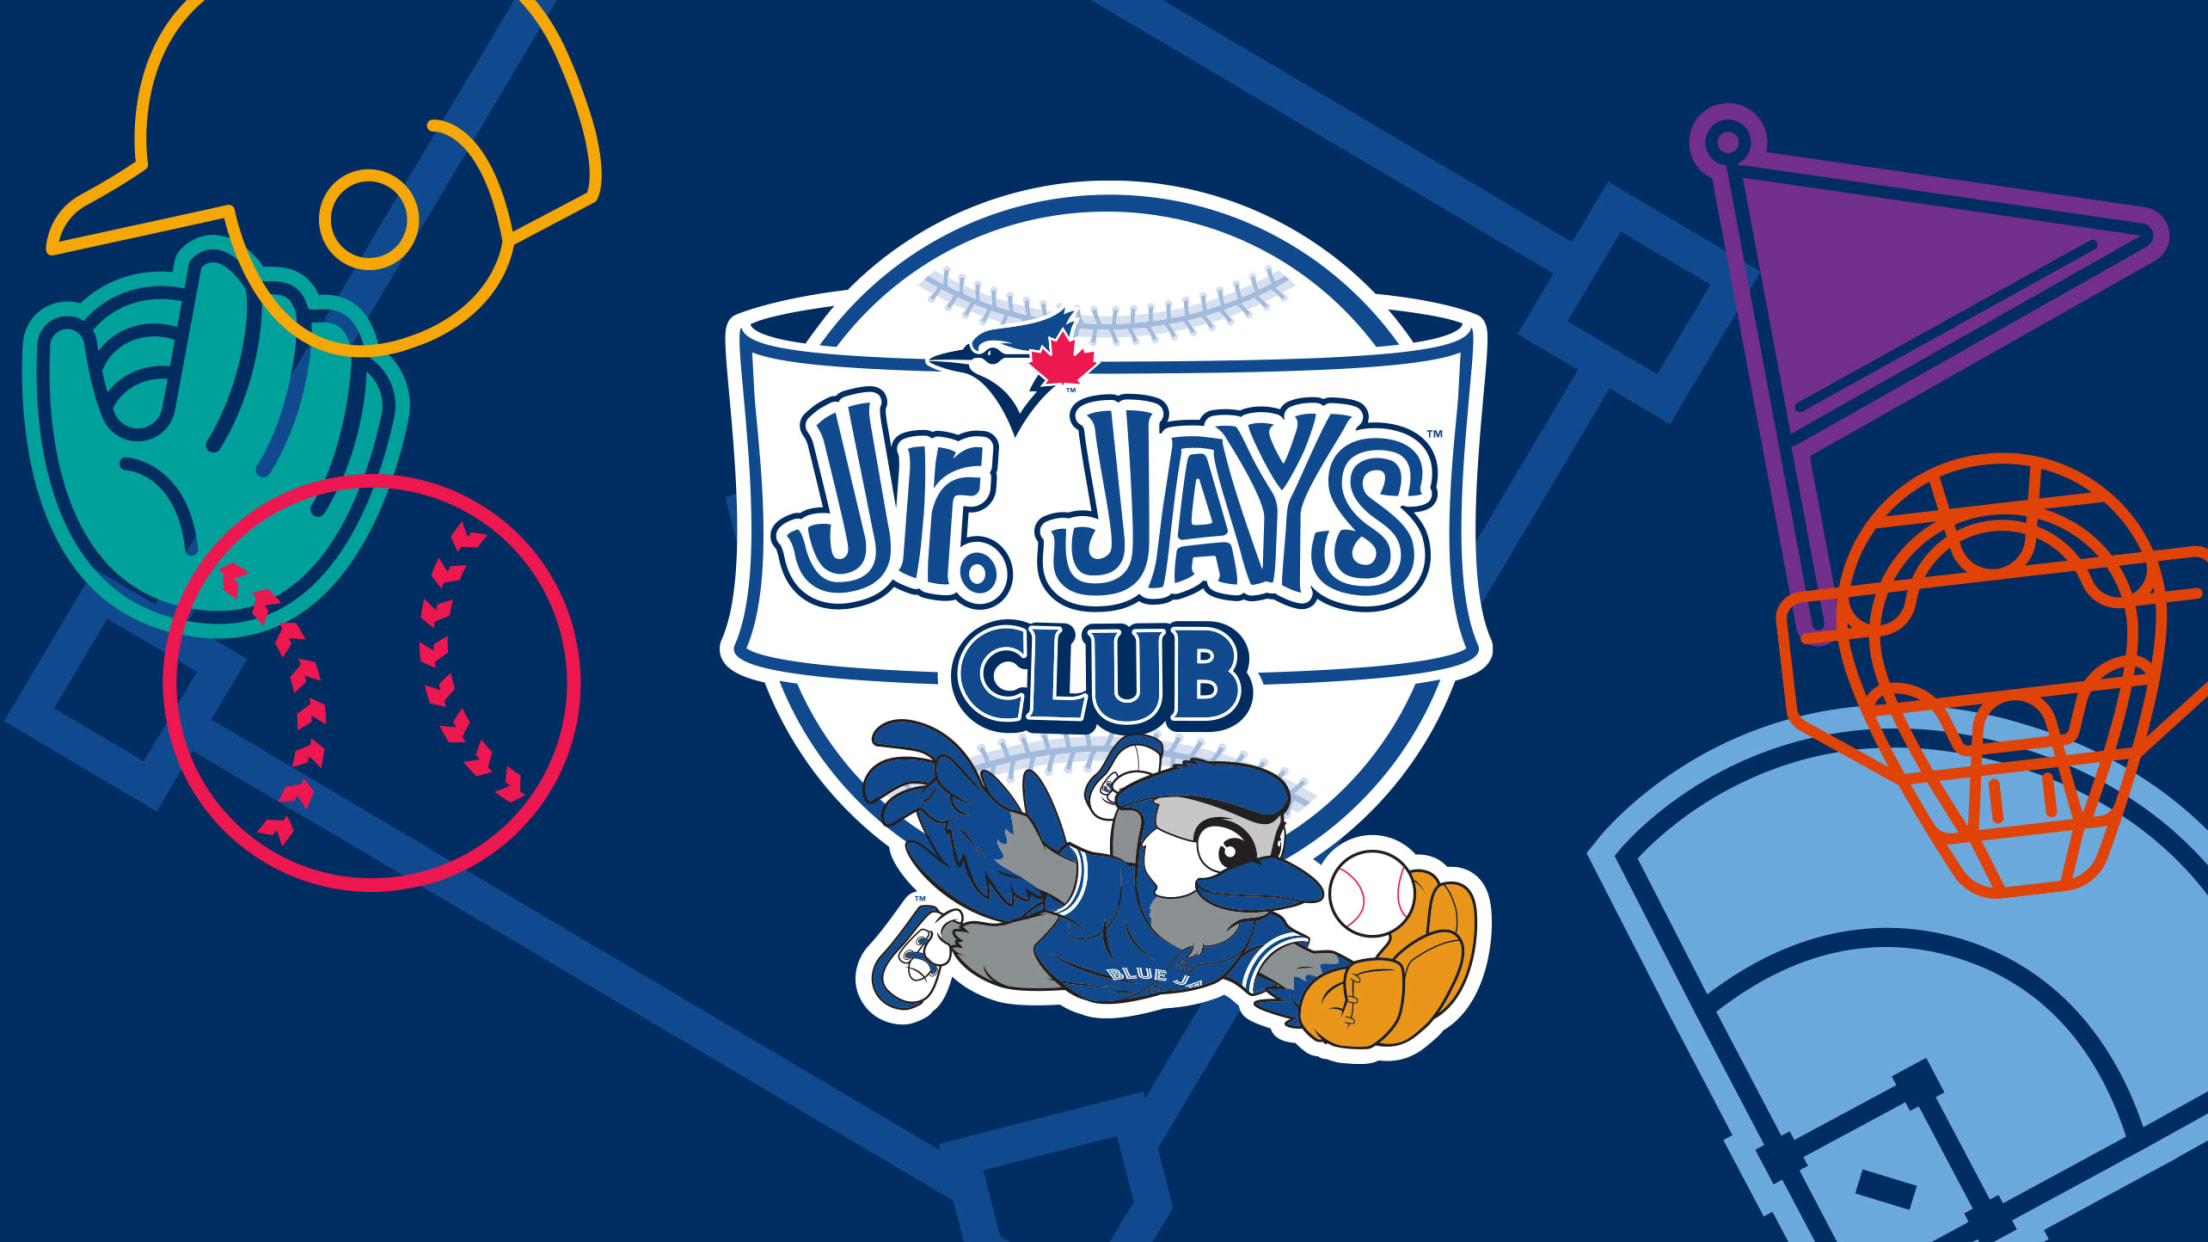 Toronto Blue Jays, Jr. Jays Club